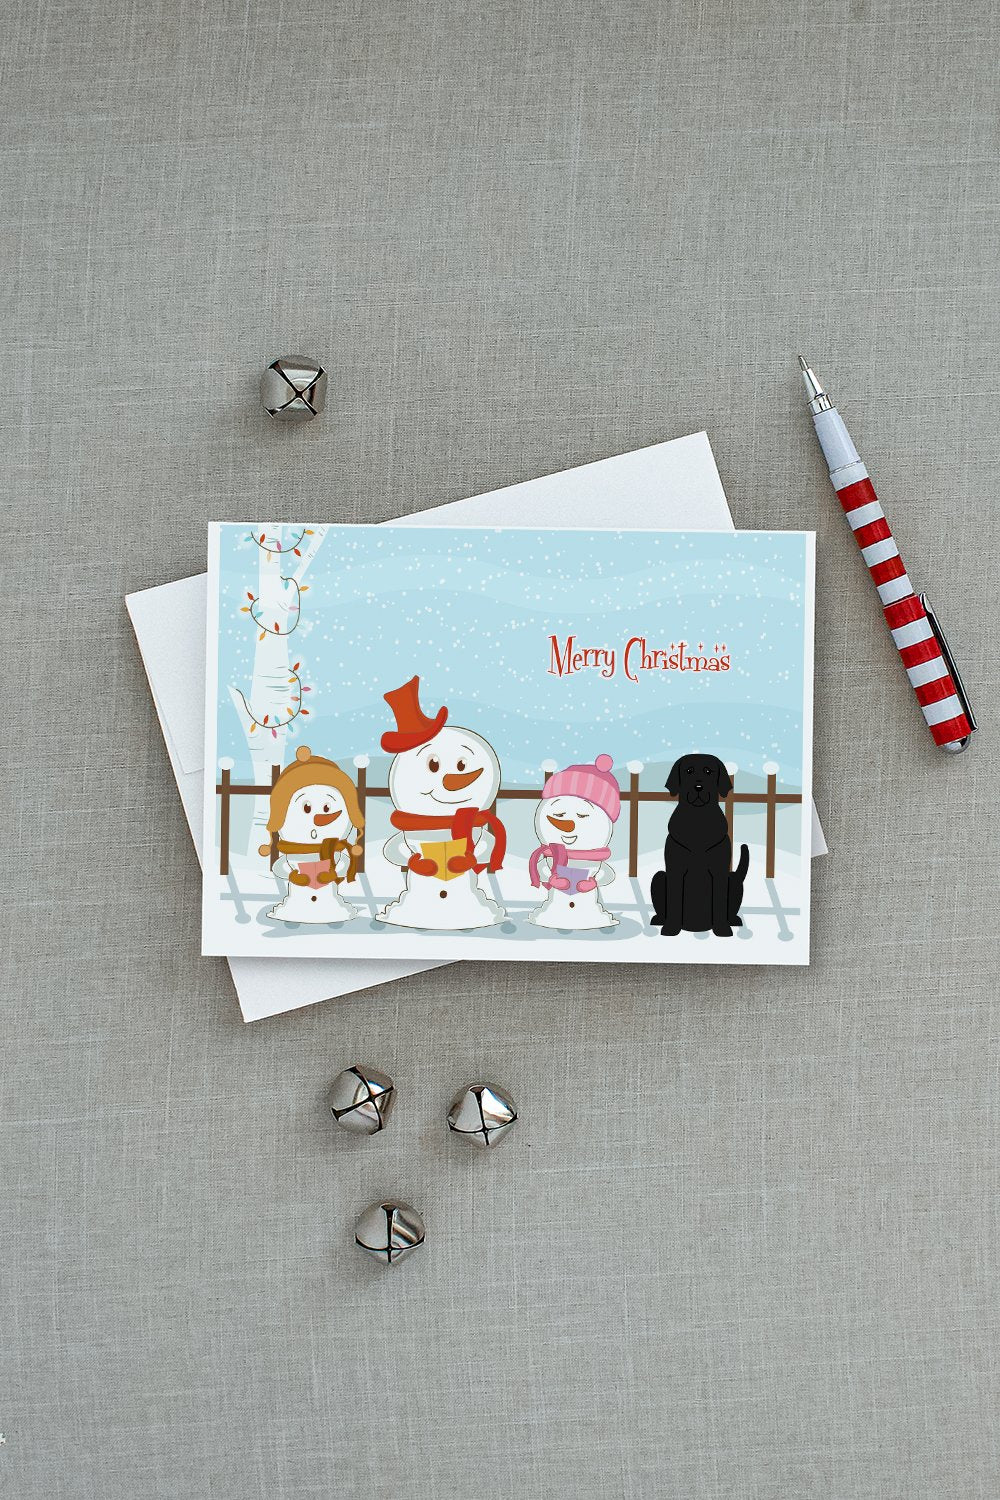 Merry Christmas Carolers Black Labrador Greeting Cards and Envelopes Pack of 8 - the-store.com